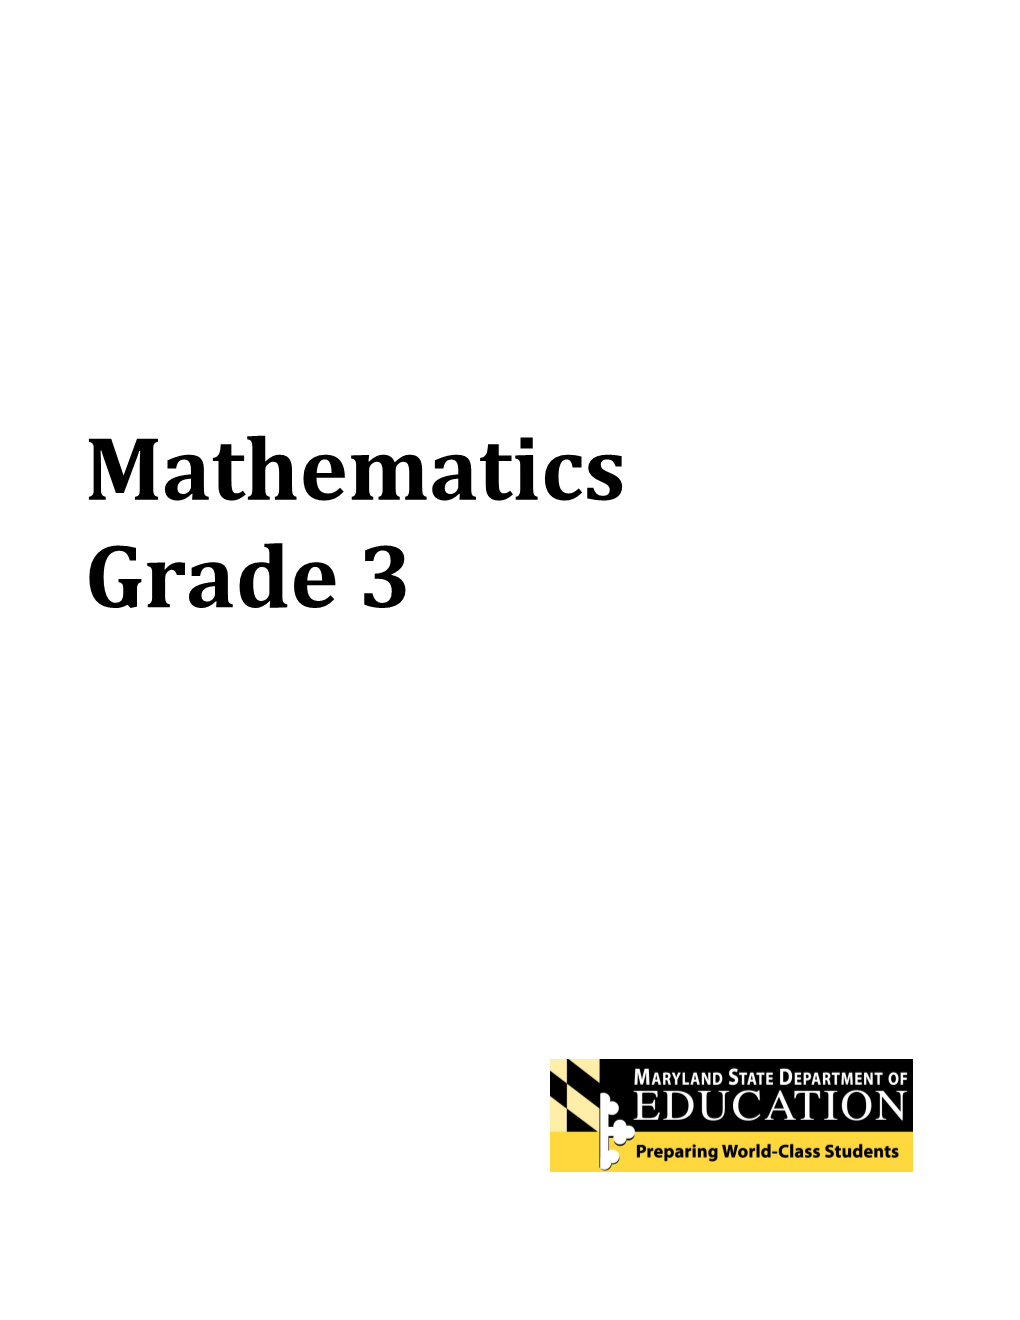 Mathematics Grade 3